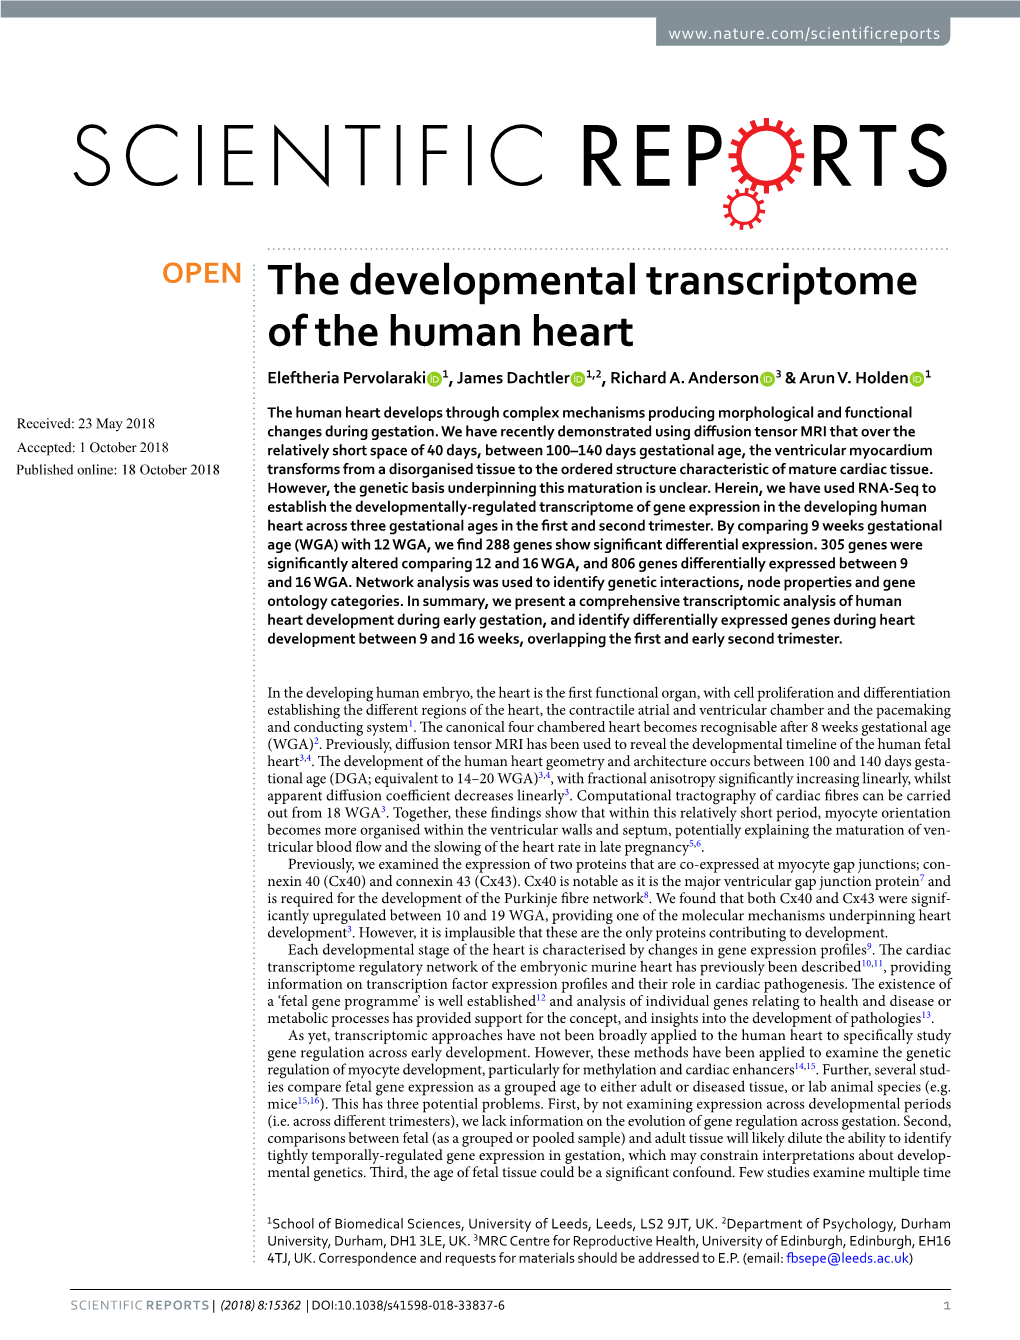 The Developmental Transcriptome of the Human Heart Eleftheria Pervolaraki 1, James Dachtler 1,2, Richard A